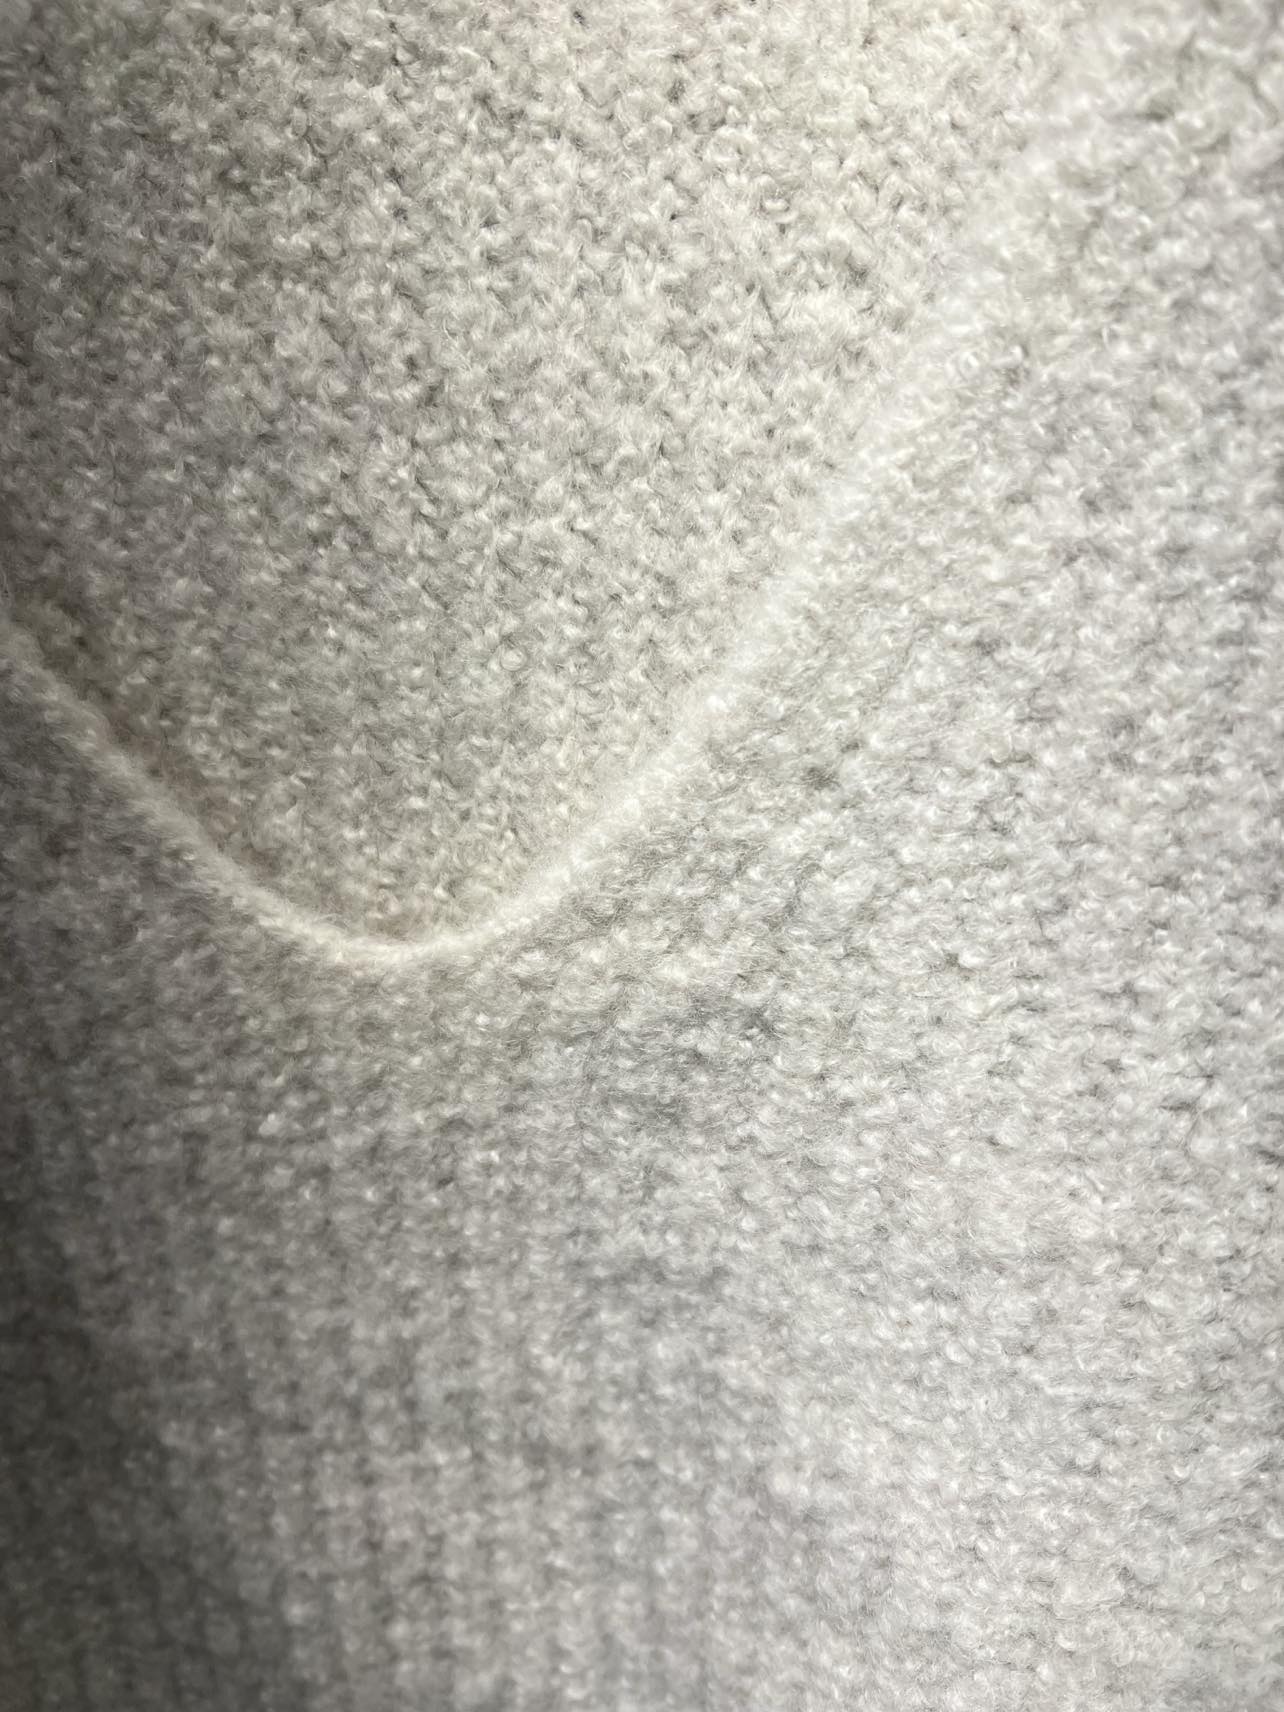 Monari V-Neck Seamless Fleece Sweater - Macadamia 806649